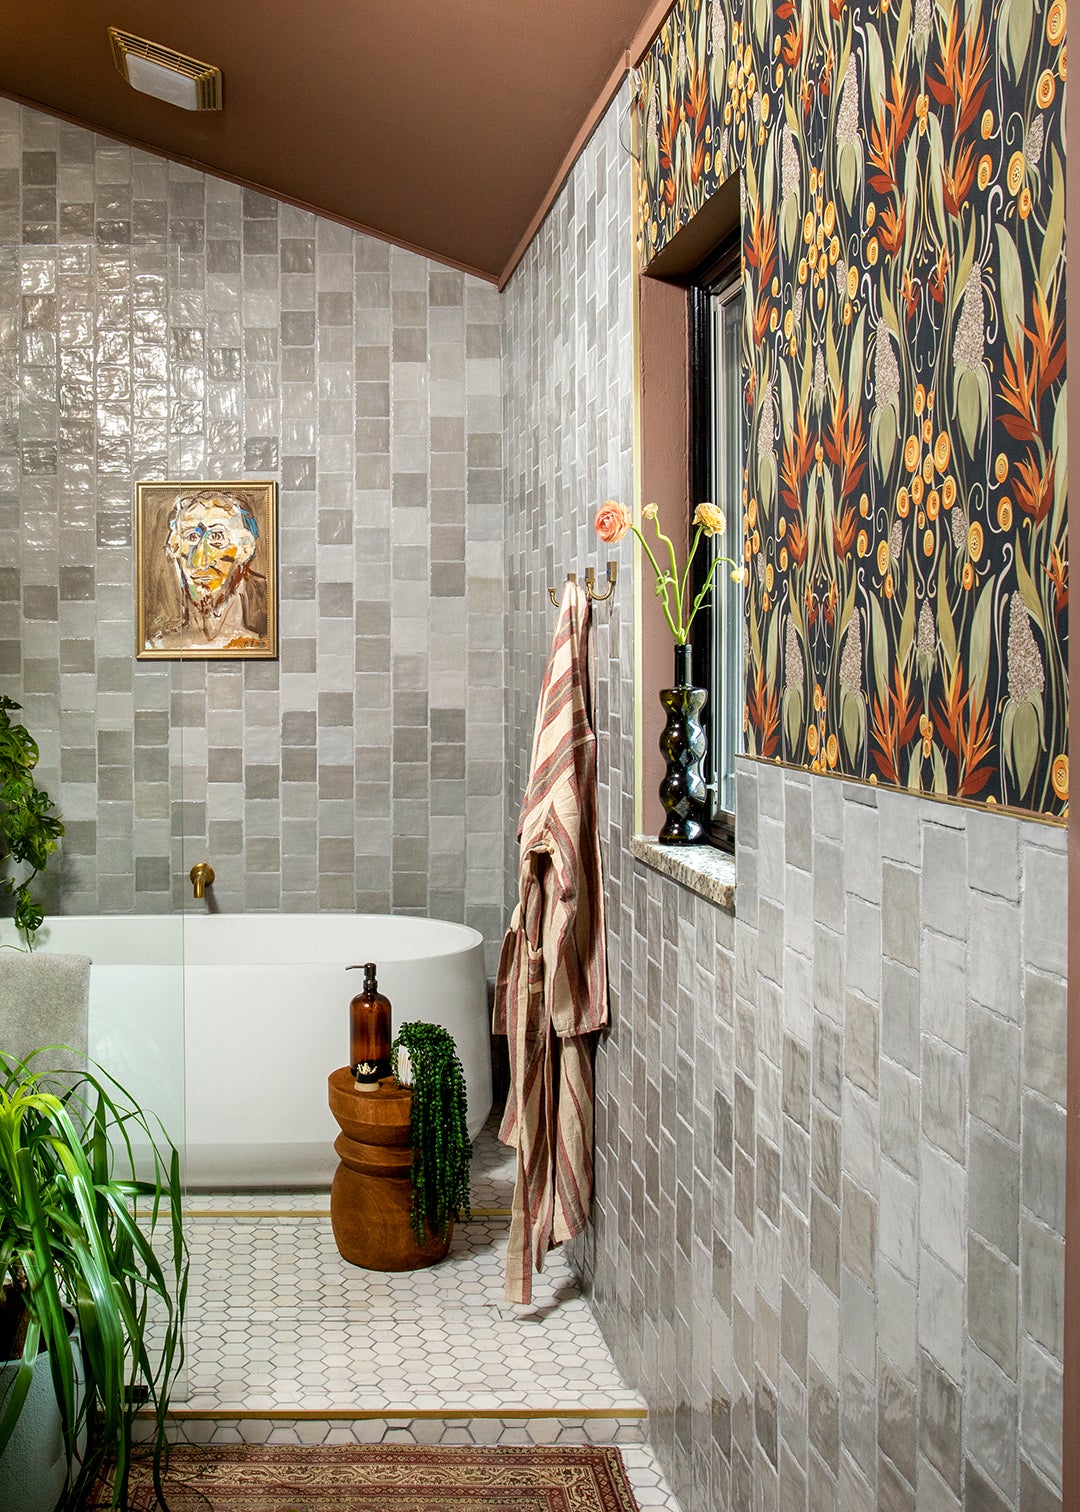 Wallpaper above bathroom tile